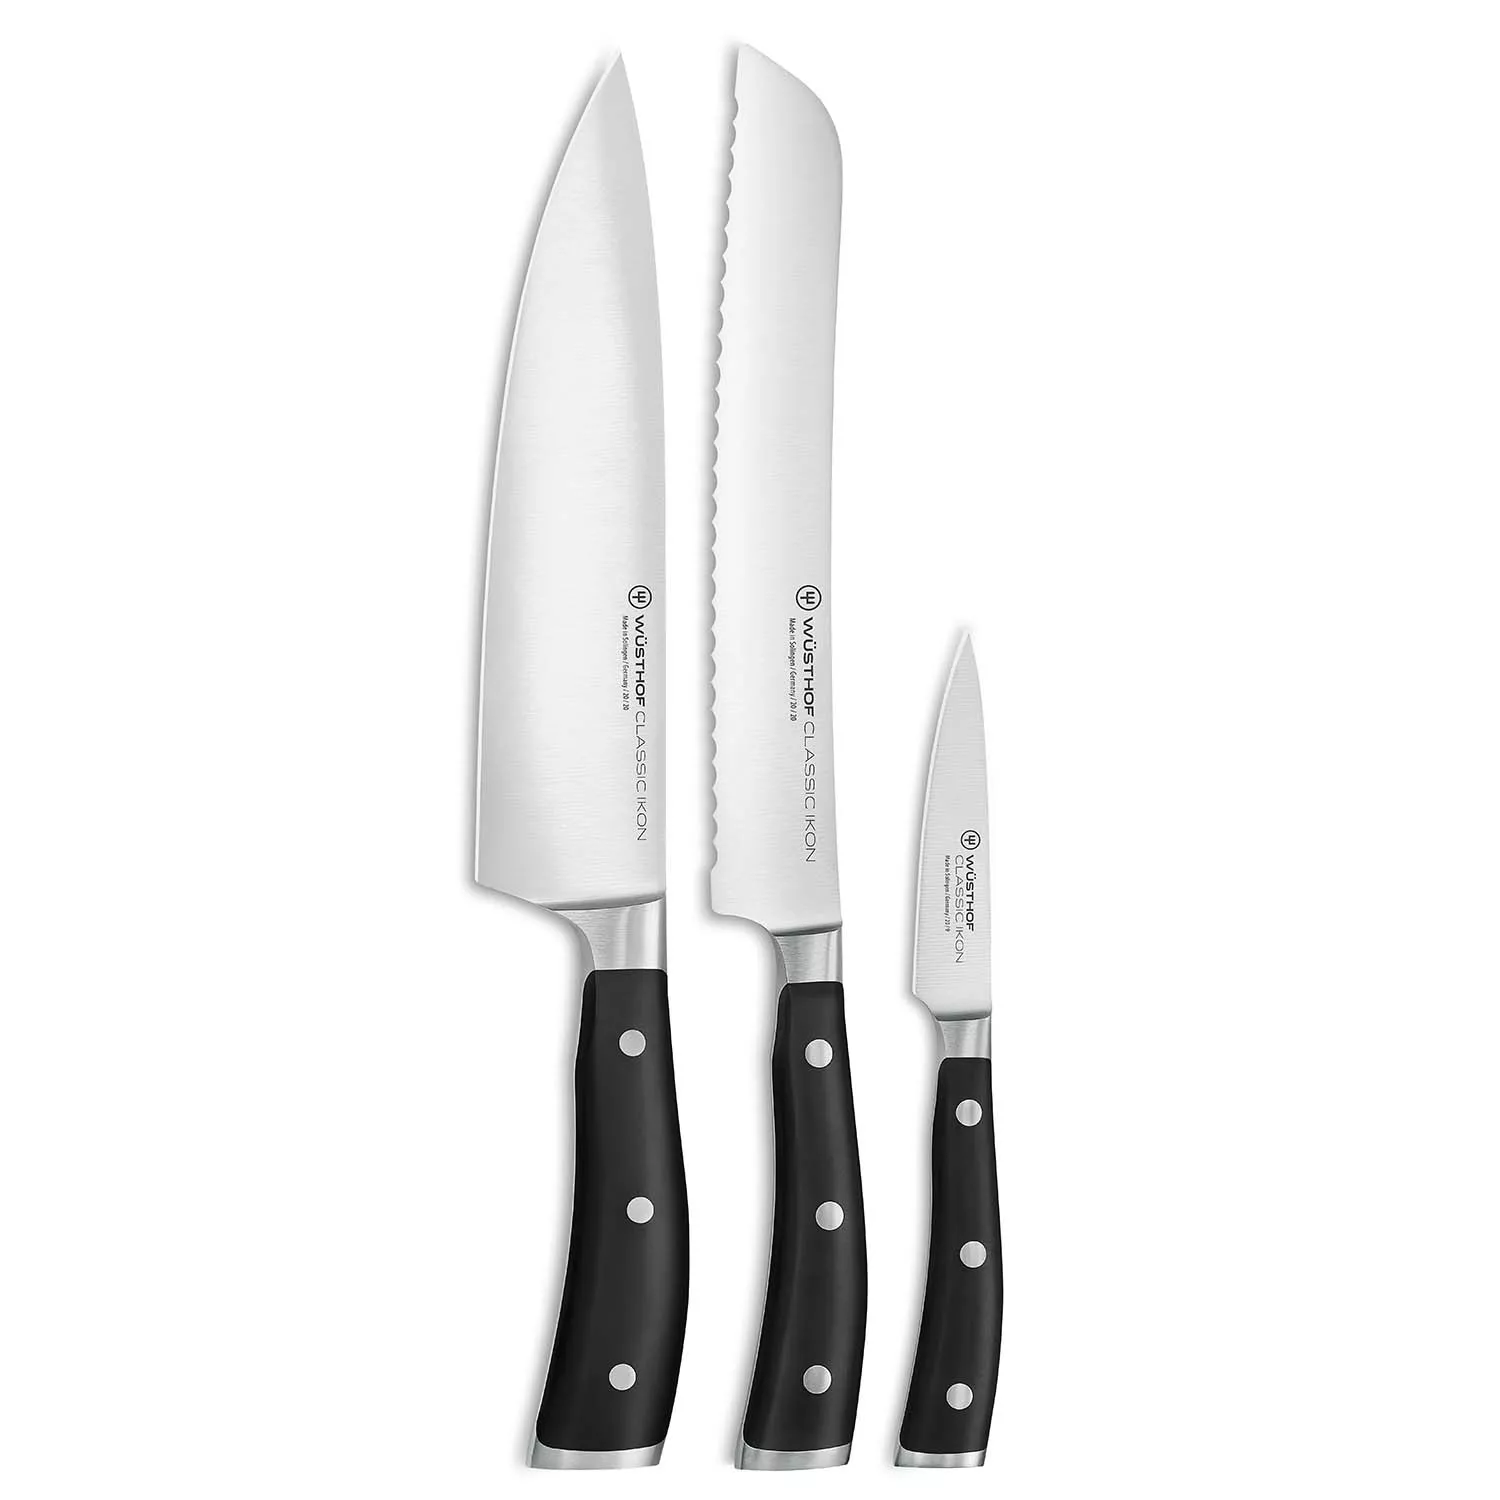 KitchenAid Classic Forged 3-Piece Triple Rivet Starter Cutlery Set